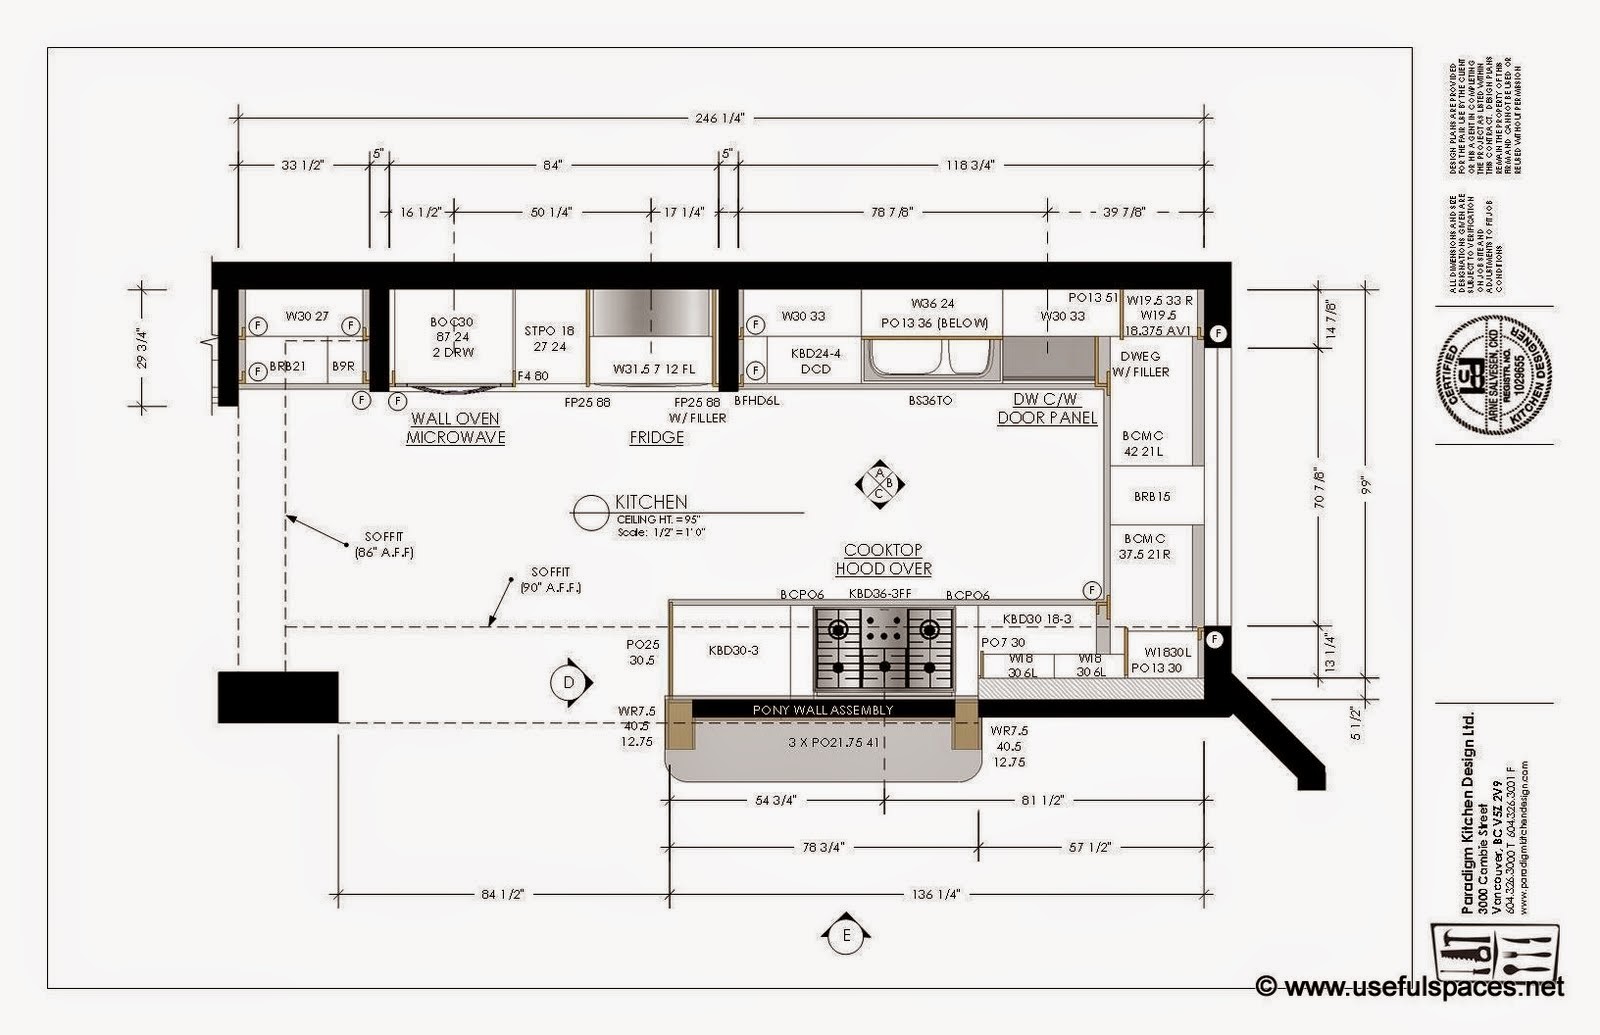 Kitchen Ideas - dumitruiandra: how to design a kitchen layout